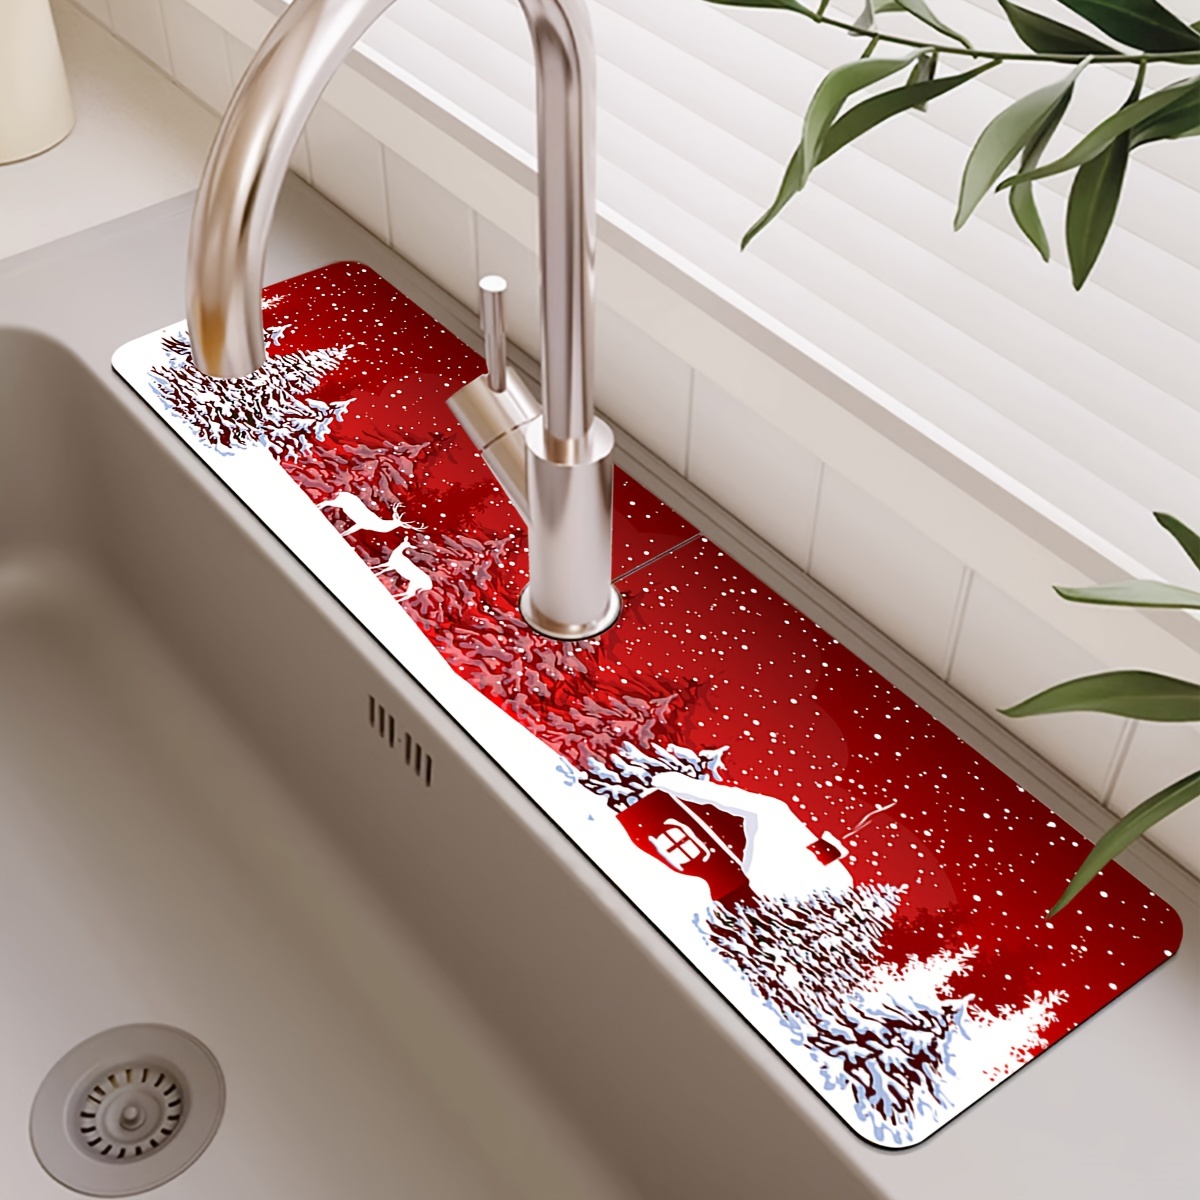 New Christmas Diatom Mud Faucet Absorbent Mat, Kitchen Countertop